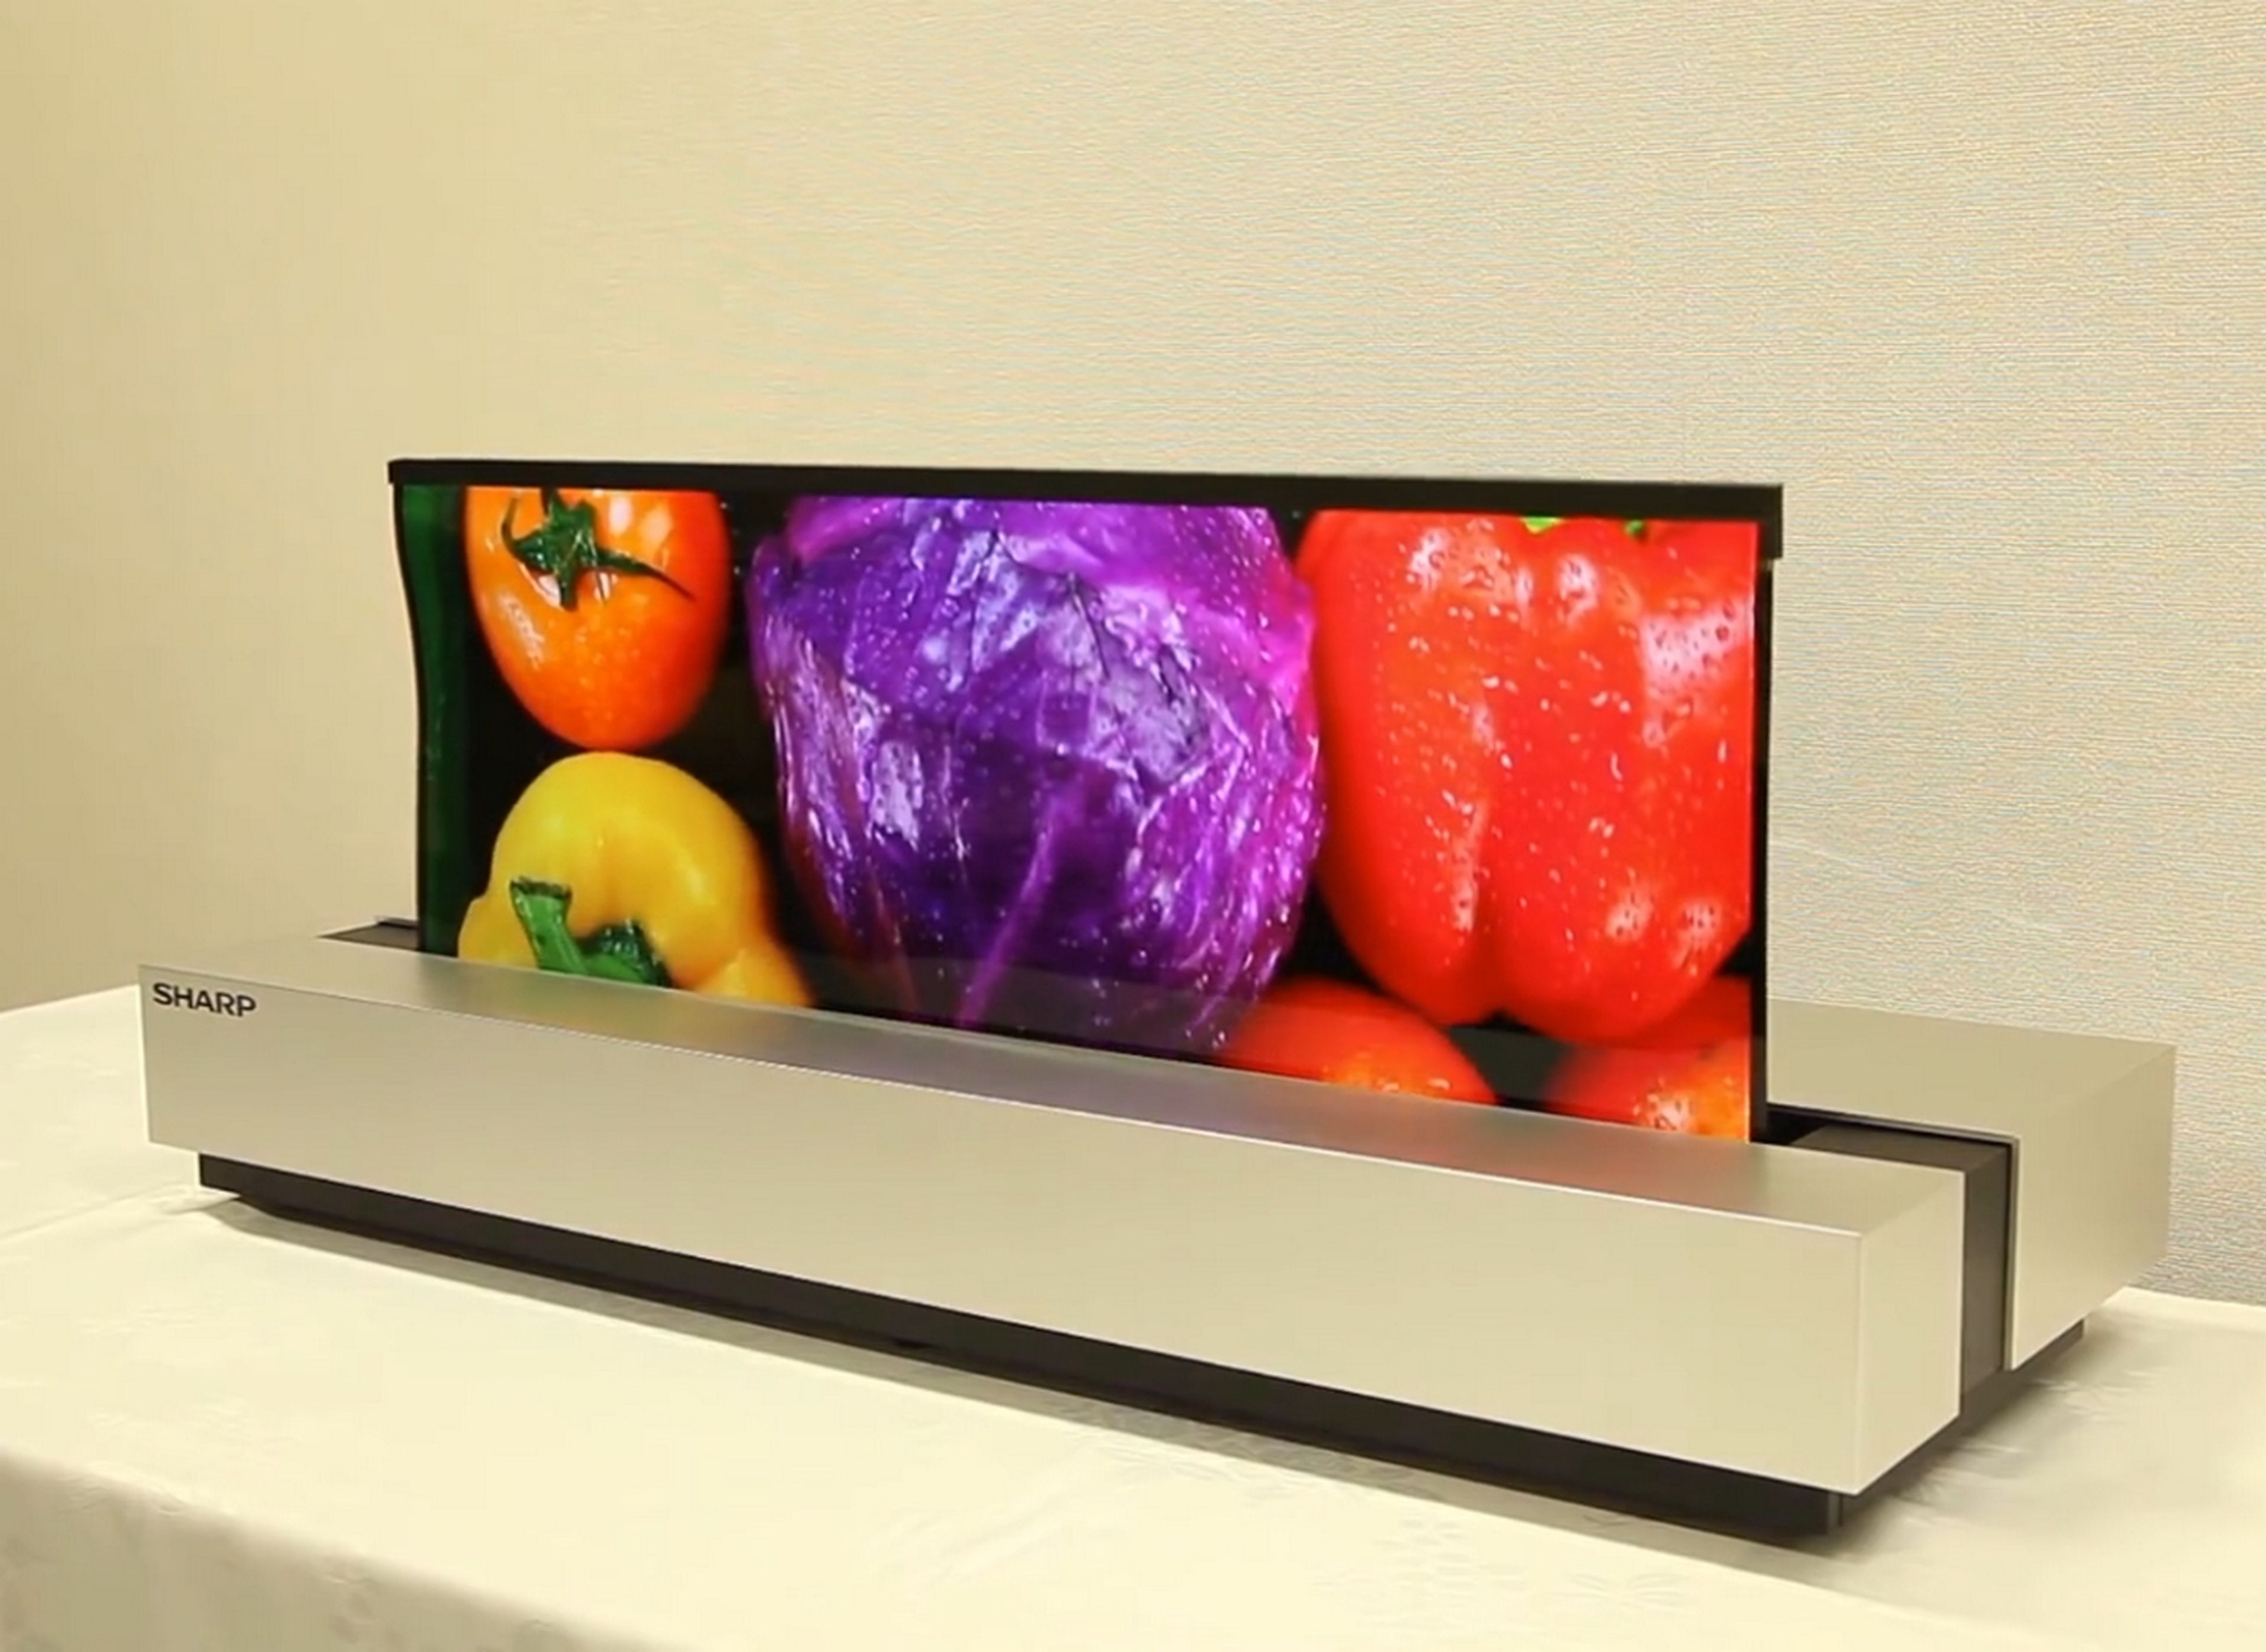 Sharp presenta un televisor 4K OLED enrollable (vídeo)